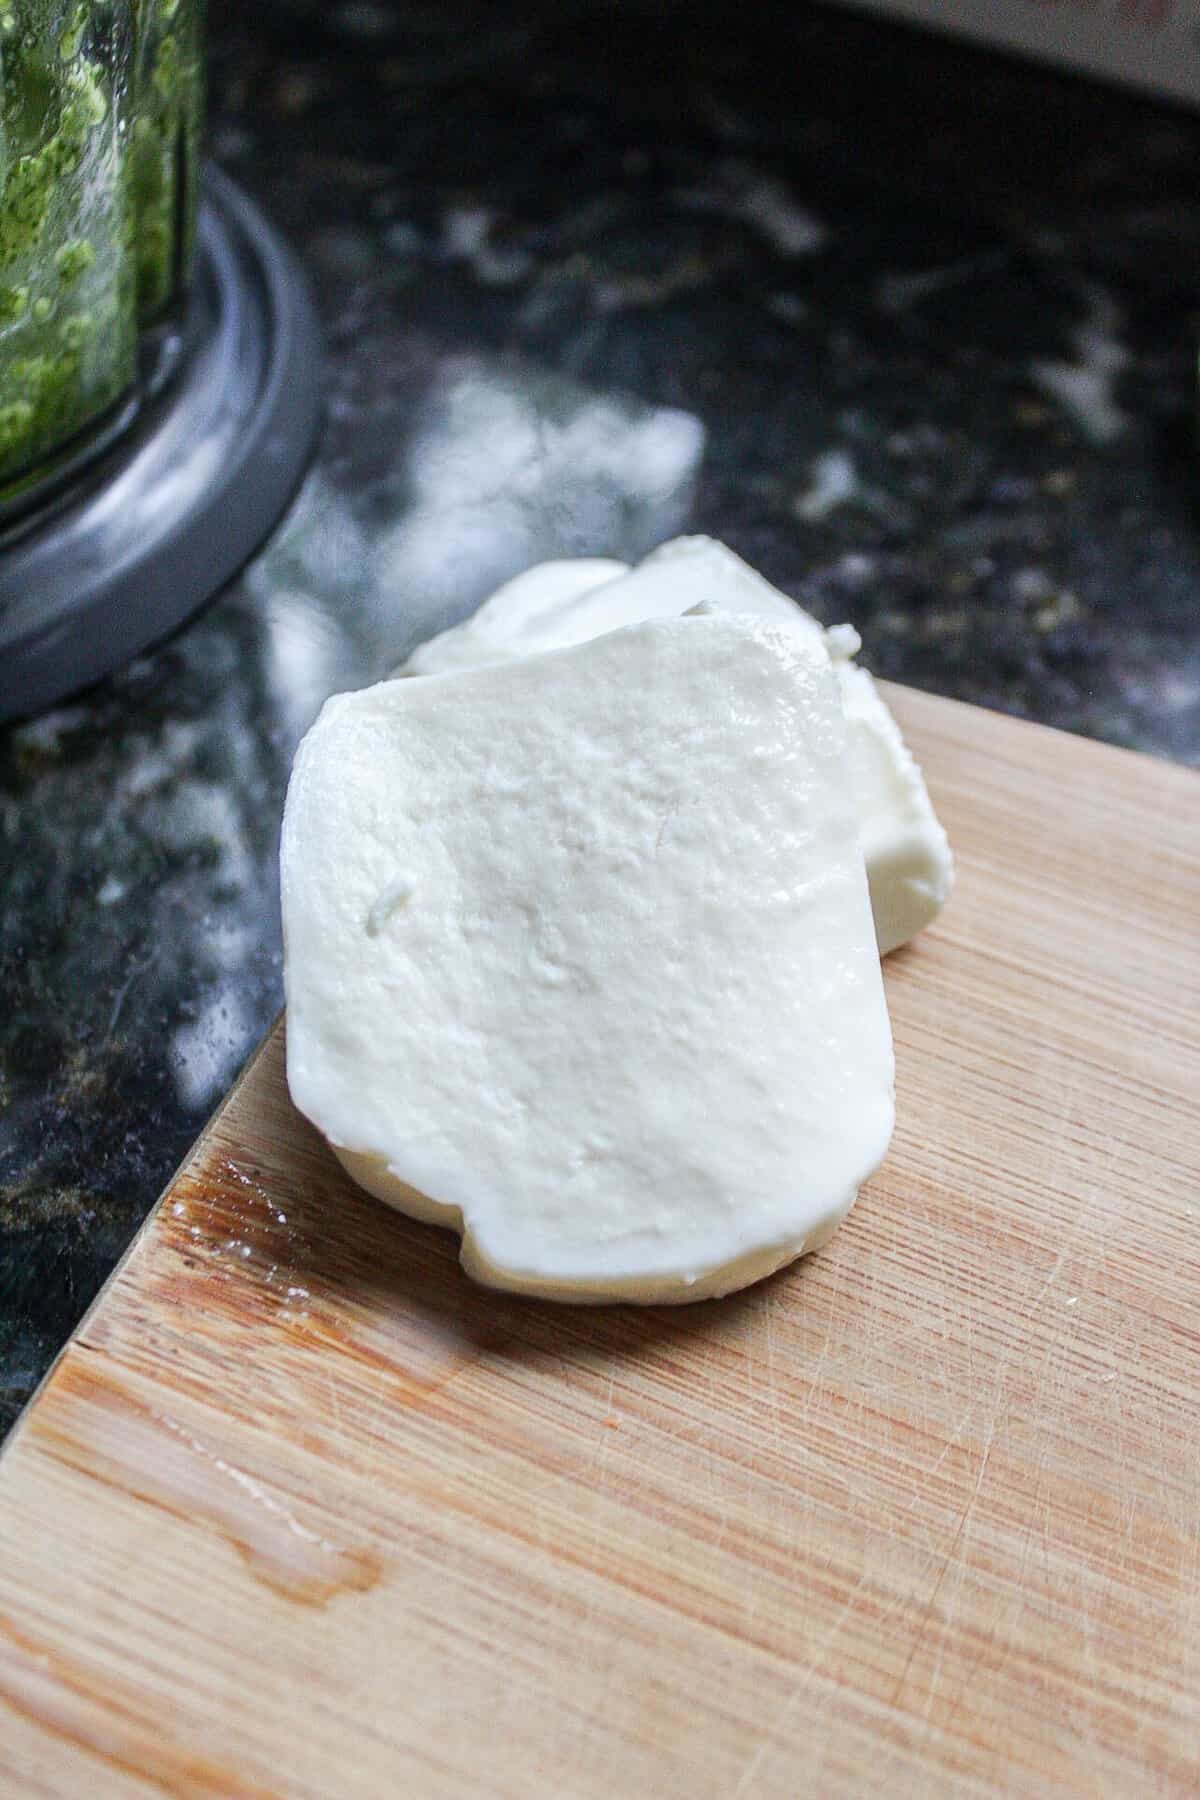 a slice of mozzarella cheese on a cutting board